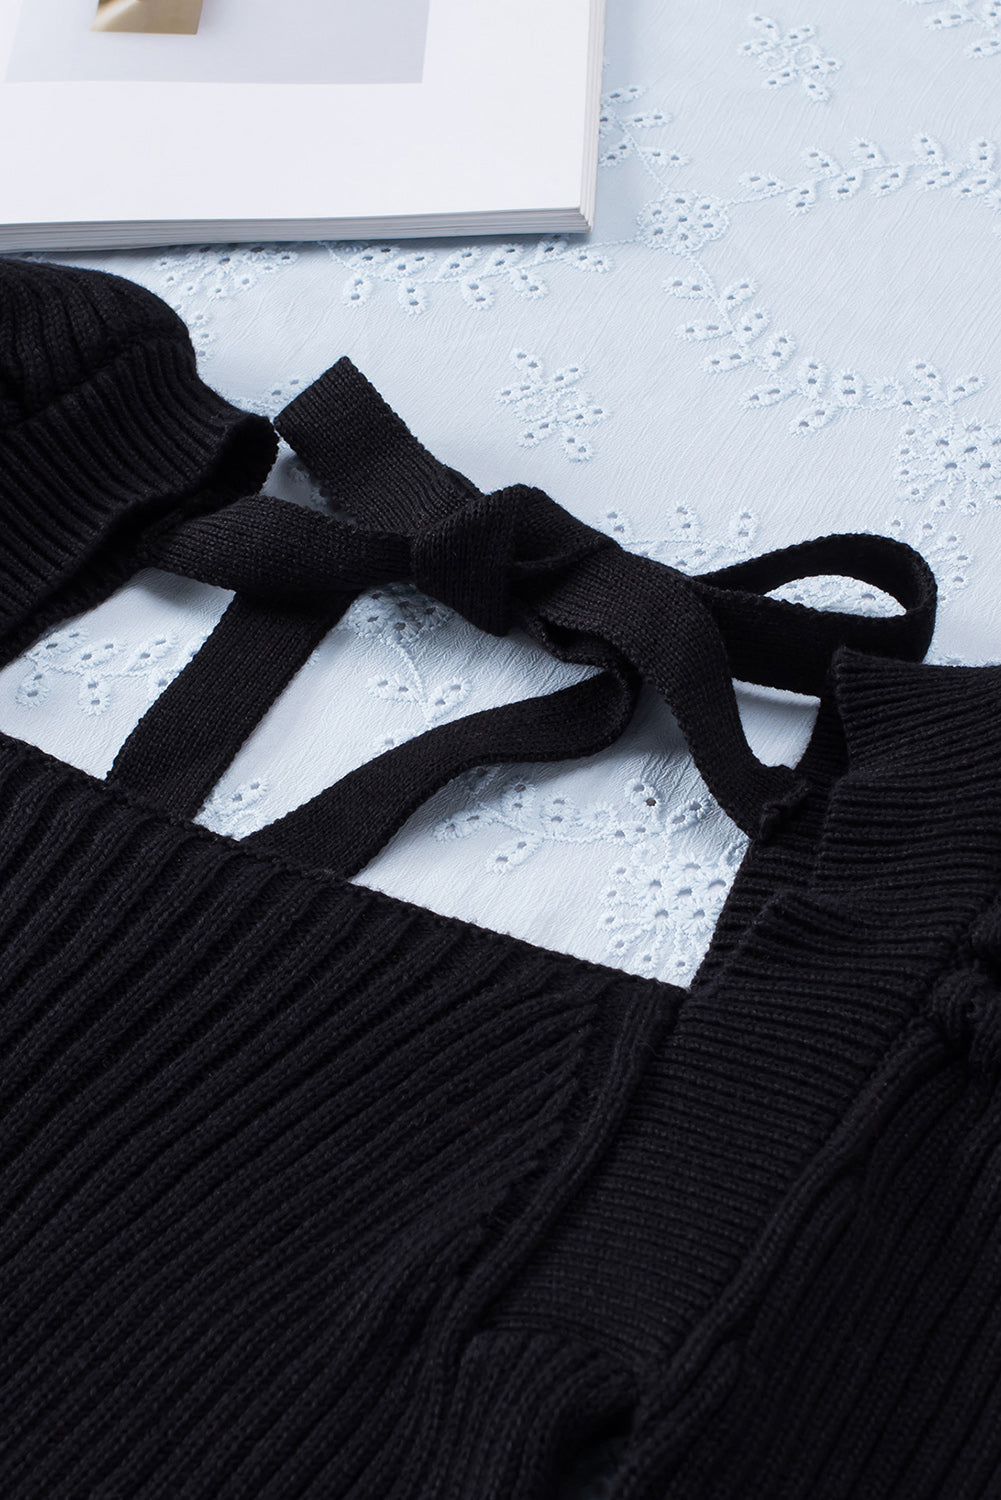 Black Square Neck Puffy Sleeve Sweater Dress